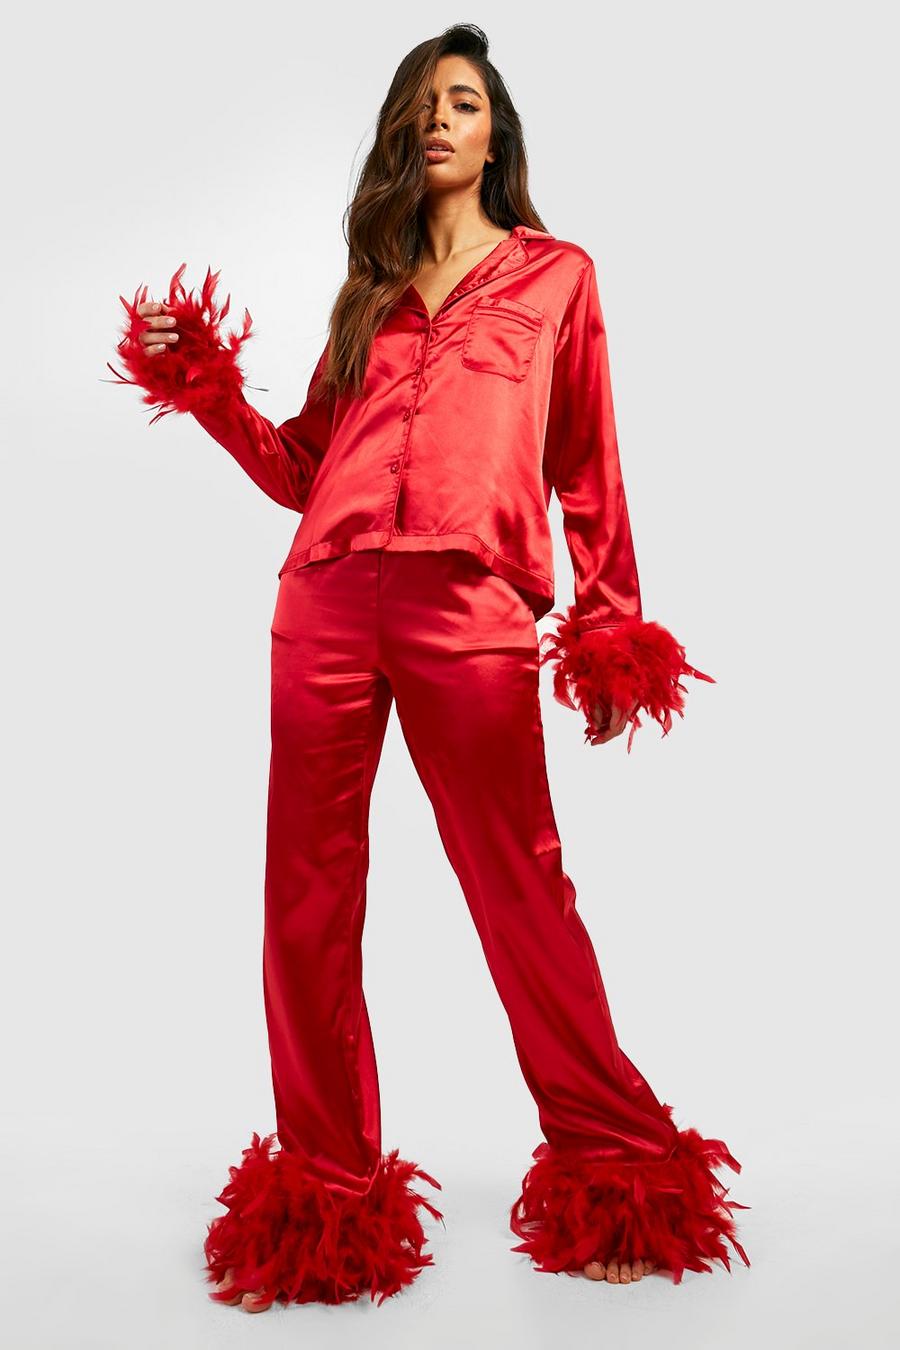 https://media.boohoo.com/i/boohoo/nzz00218_red_xl/female-red-premium-feather-trim-pajamas/?w=900&qlt=default&fmt.jp2.qlt=70&fmt=auto&sm=fit